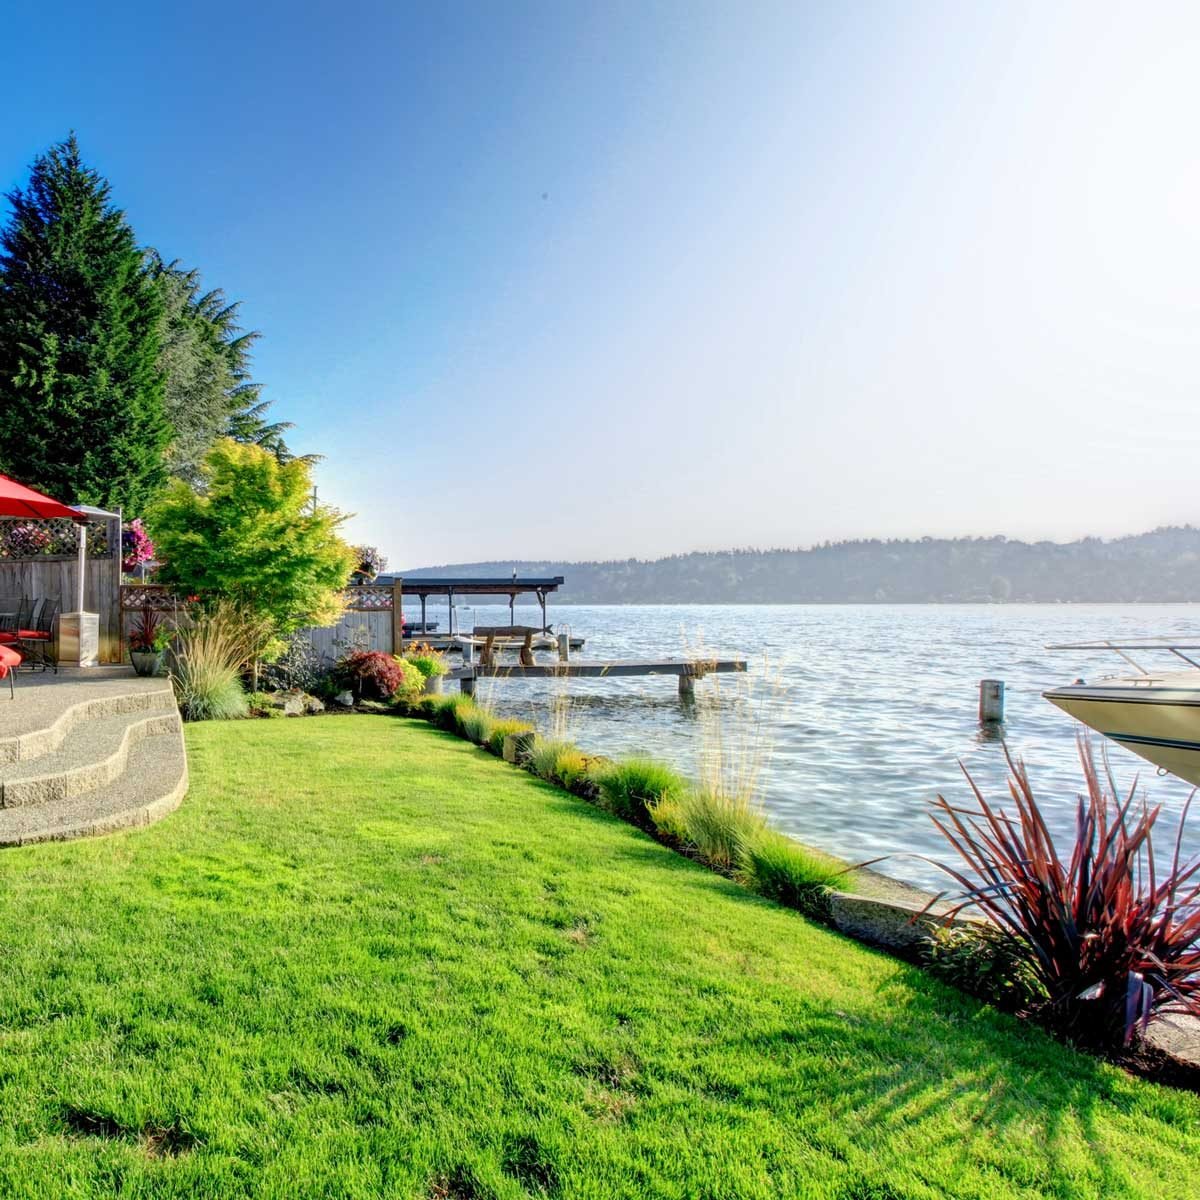 7 Shoreline Landscaping Design Ideas for Your Cabin